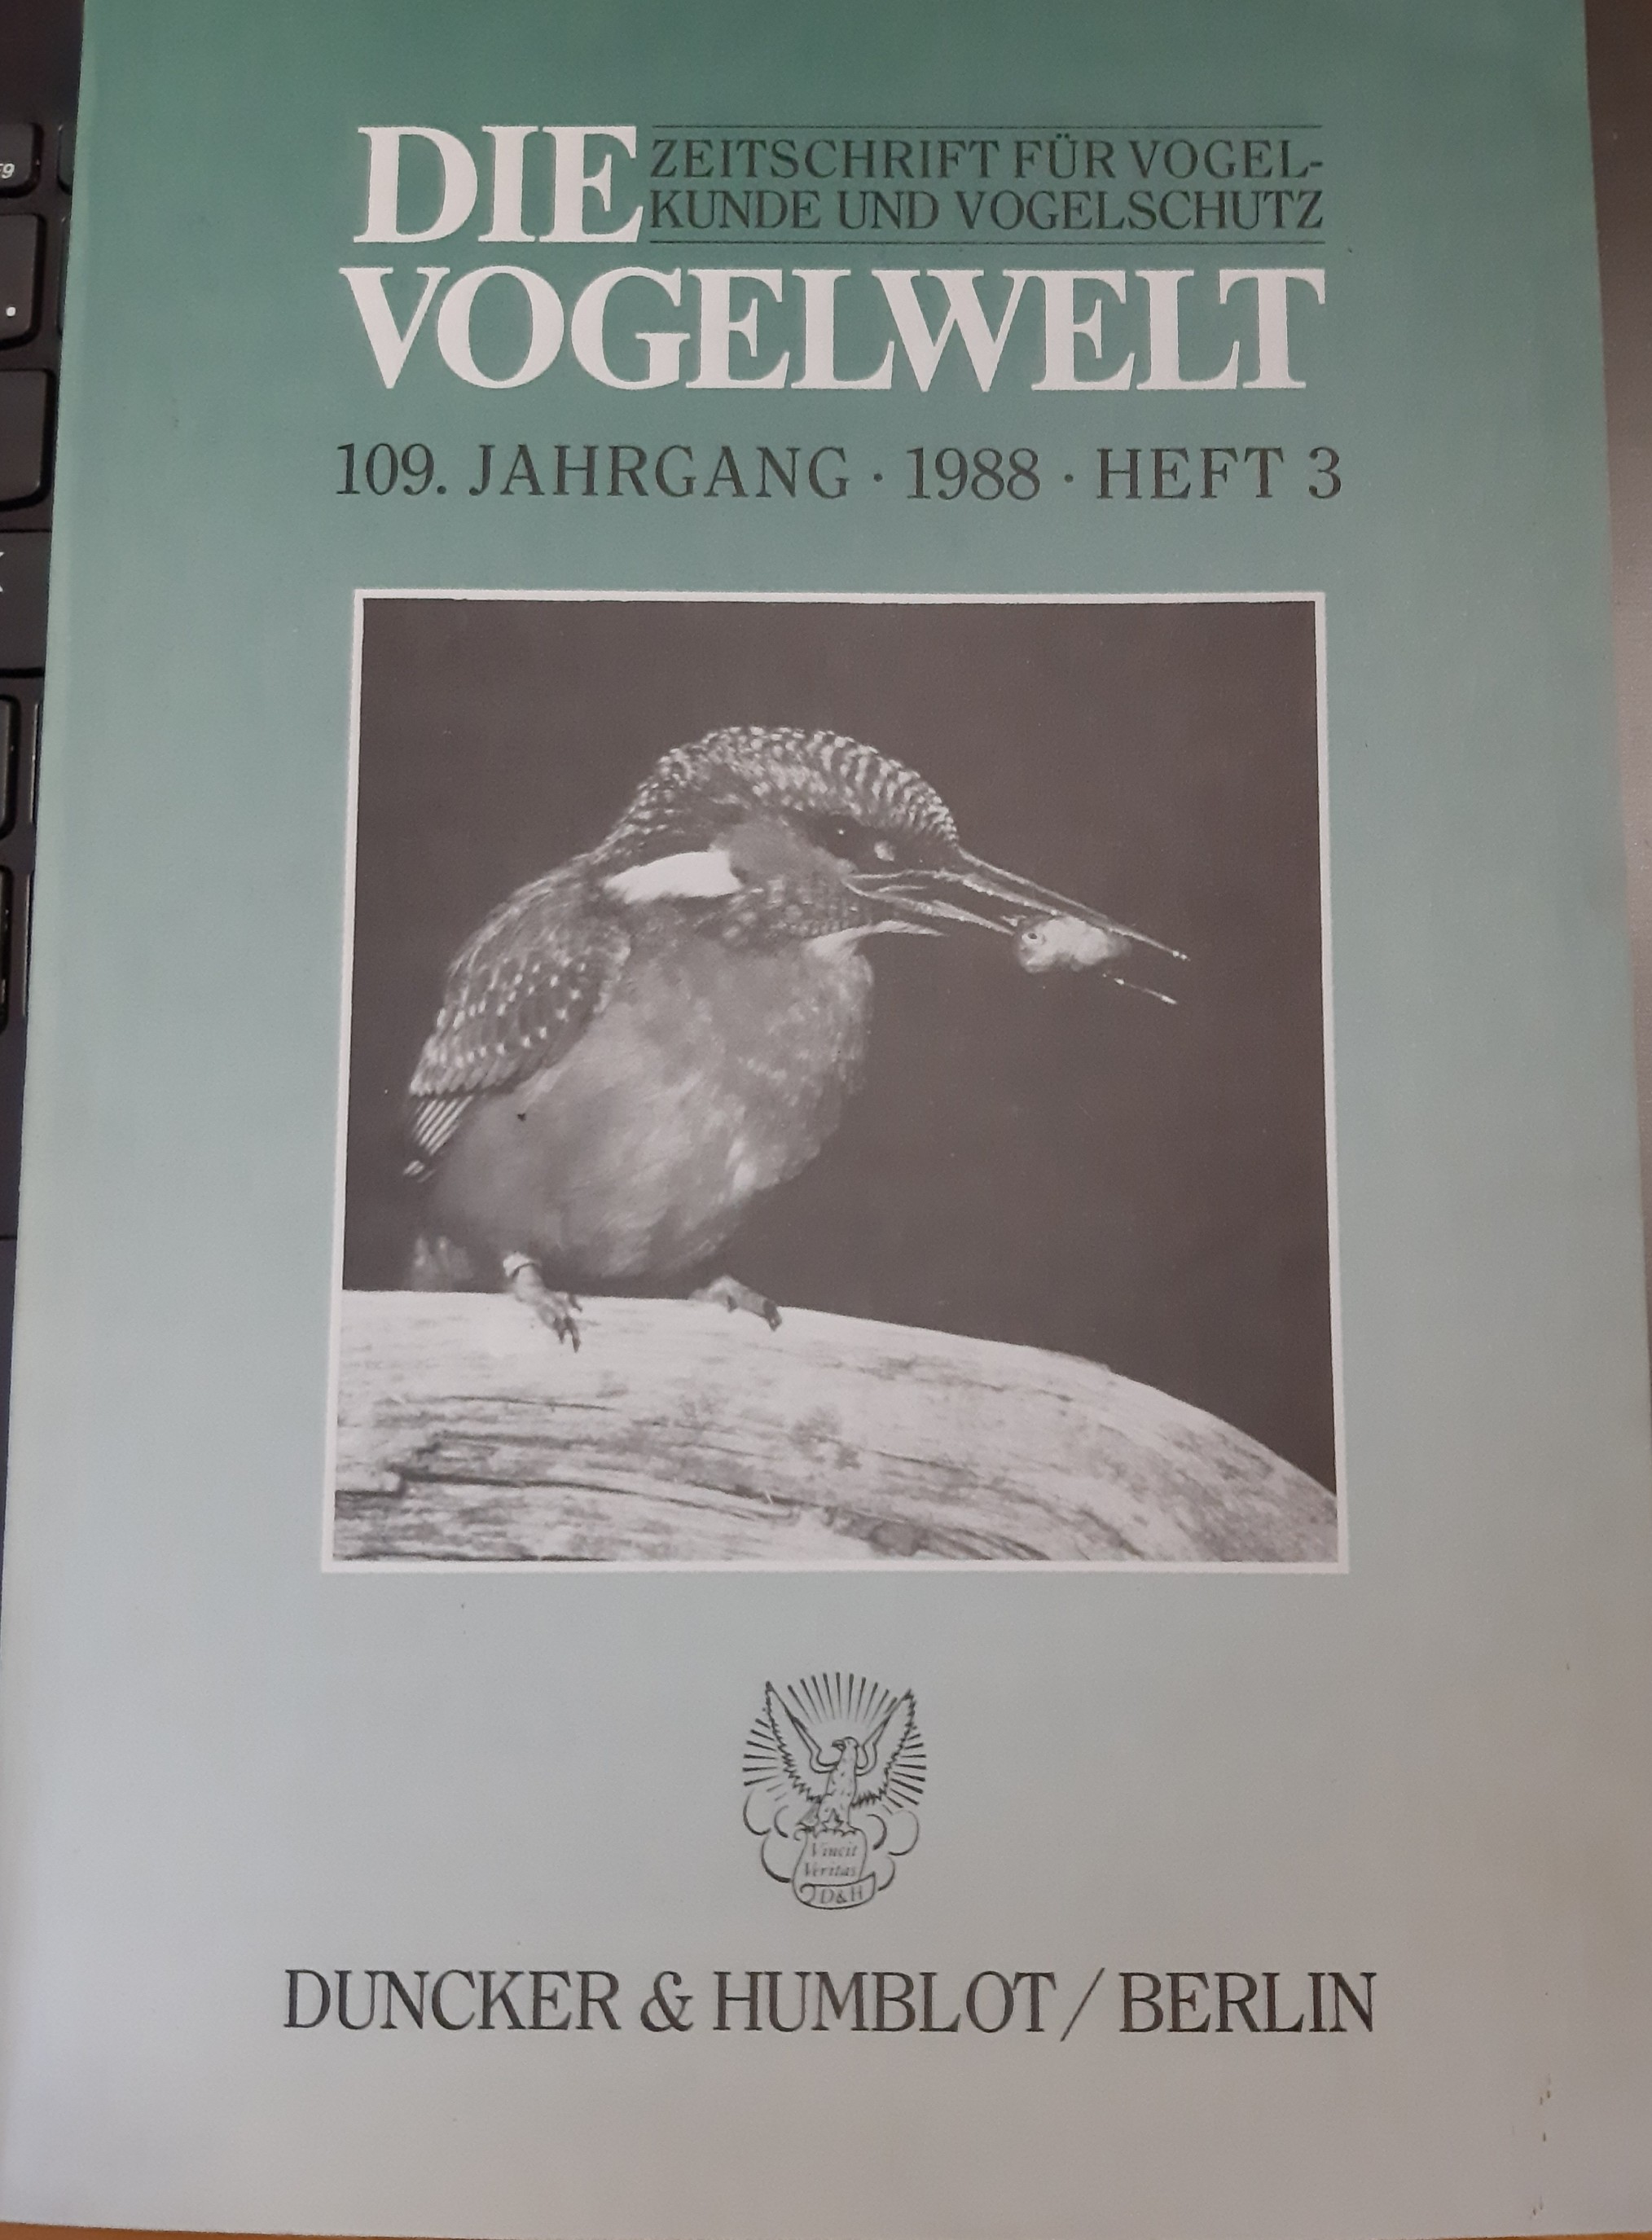 Die Vogelwelt 1988/109. évf. 3. füzet (Rippl-Rónai Múzeum CC BY-NC-ND)